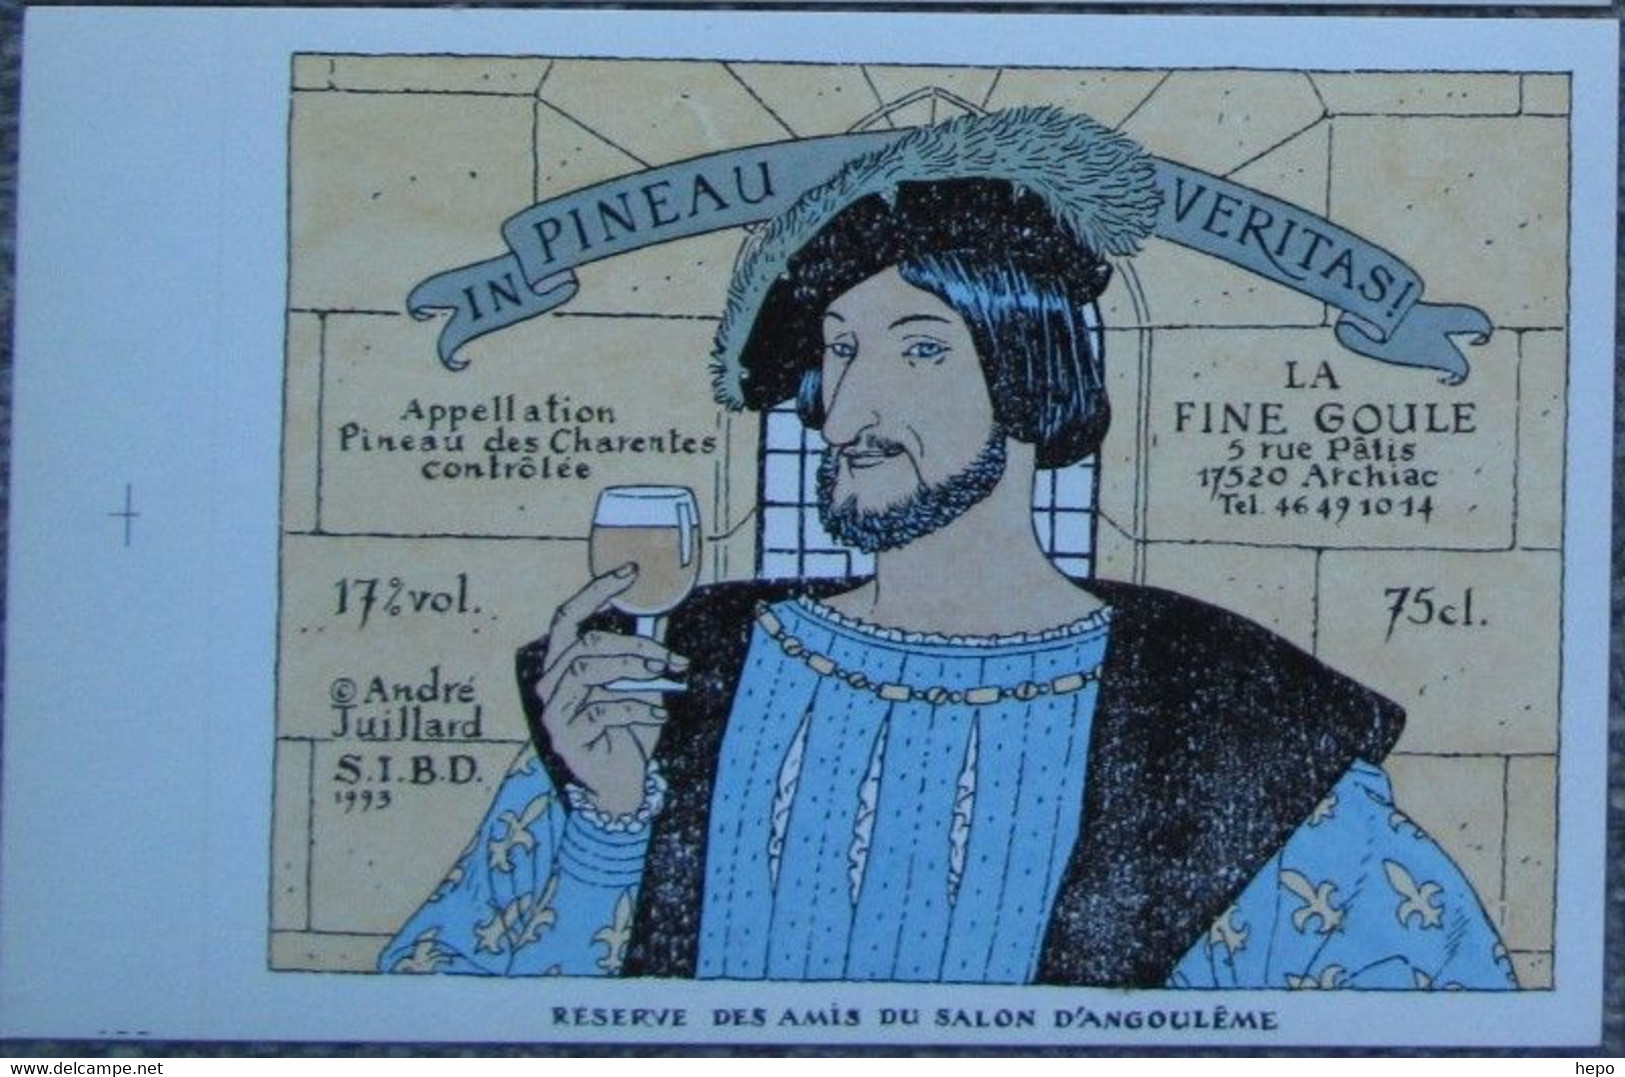 Juillard - In Pineau Veritas - Etiquette Vin 1993 Angouleme - Illustrateurs J - L